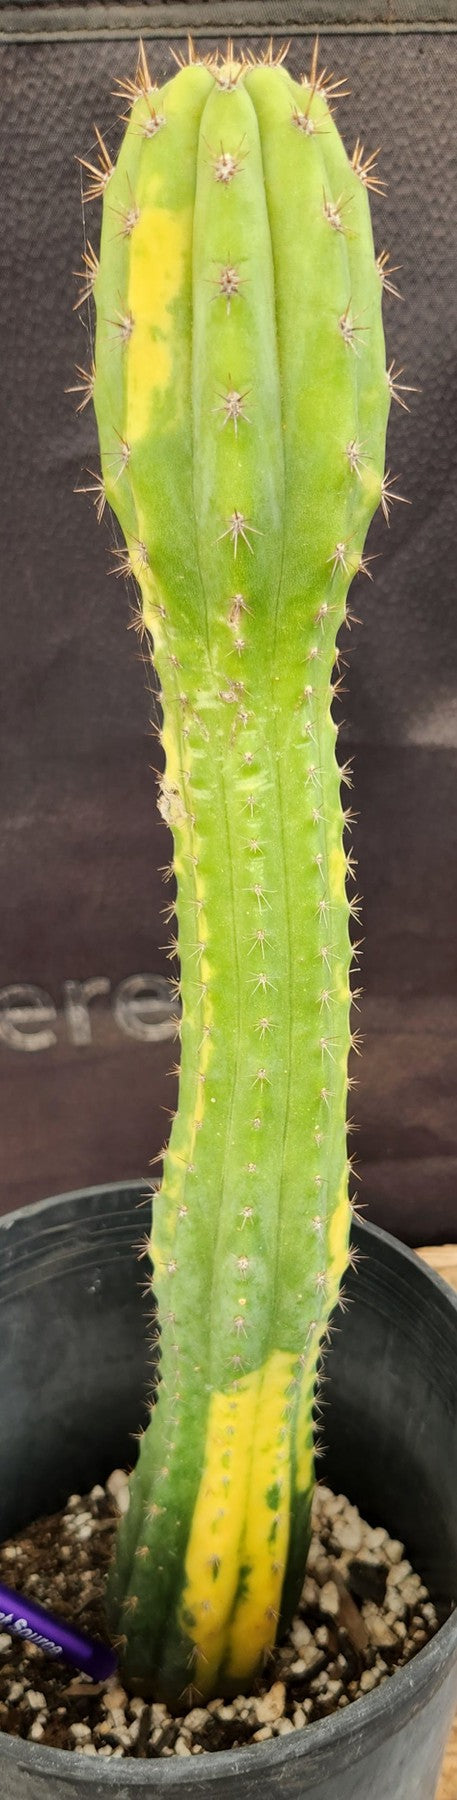 #EC37 EXACT Trichocereus Hybrid Pachanoi China Gold Variegated Cactus 13.5"